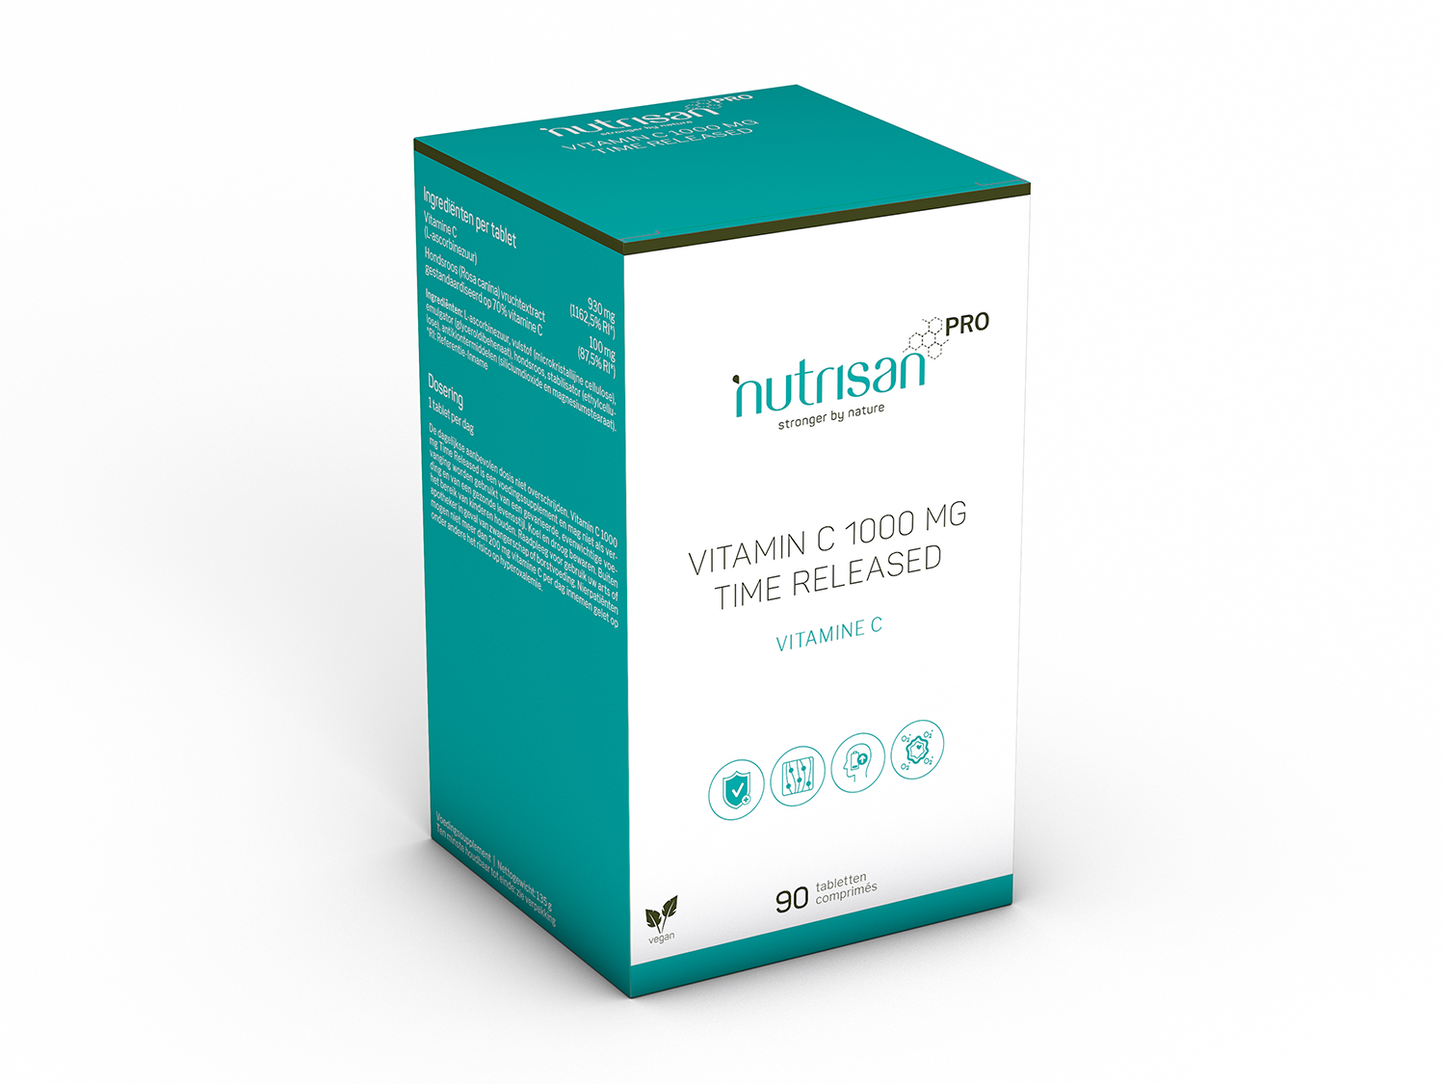 NutrisanPro Vitamin C 1000 mg Time Released - Vitamine C - 90 tabletten